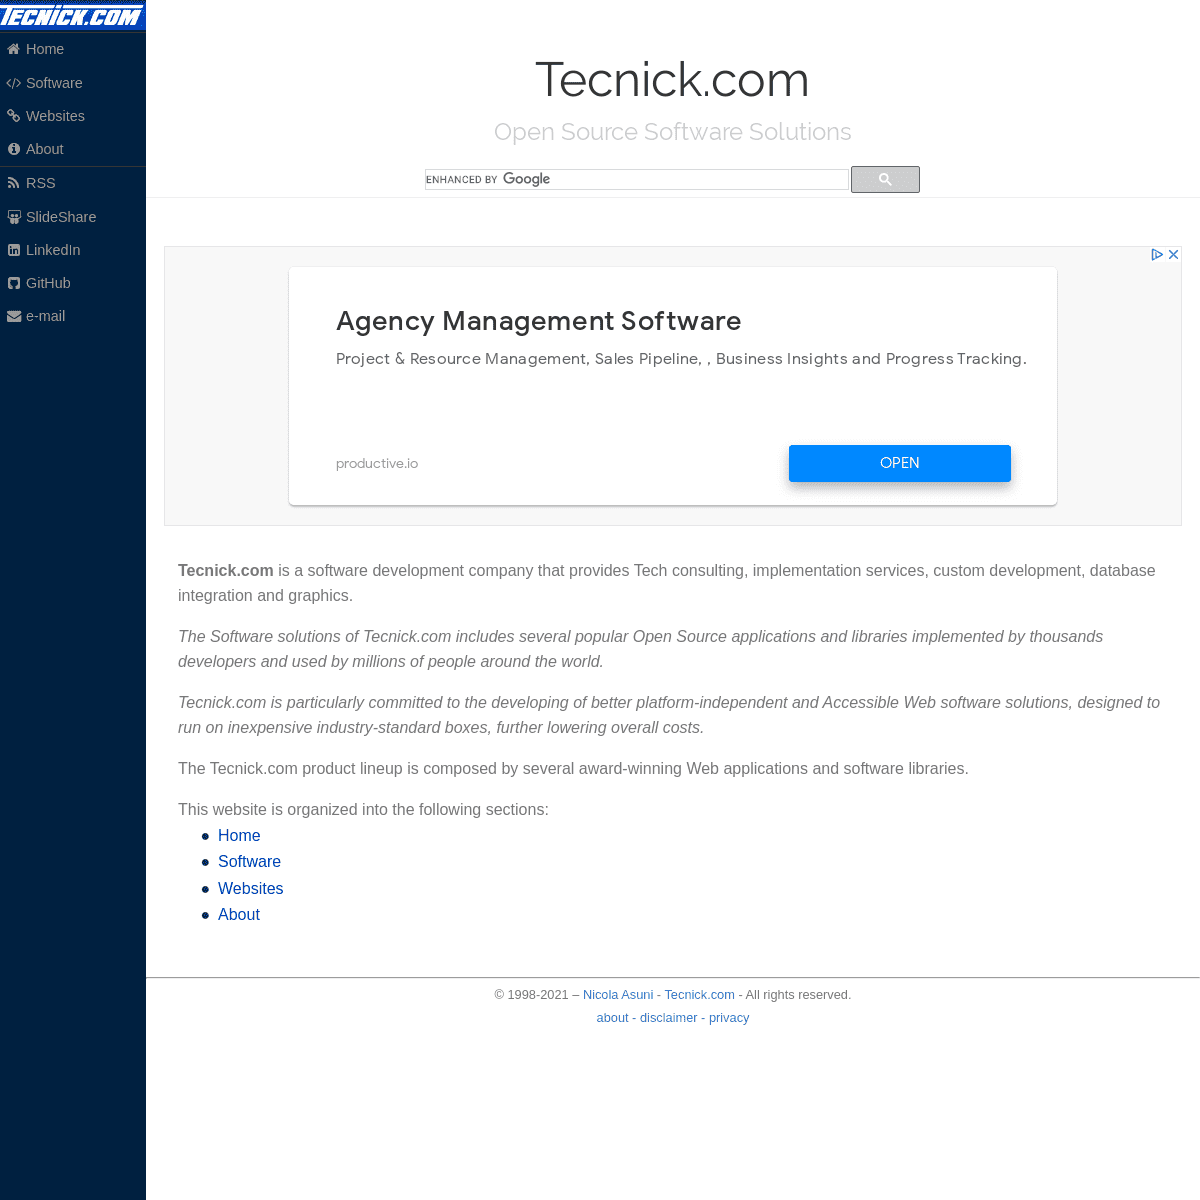 A complete backup of https://tecnick.com